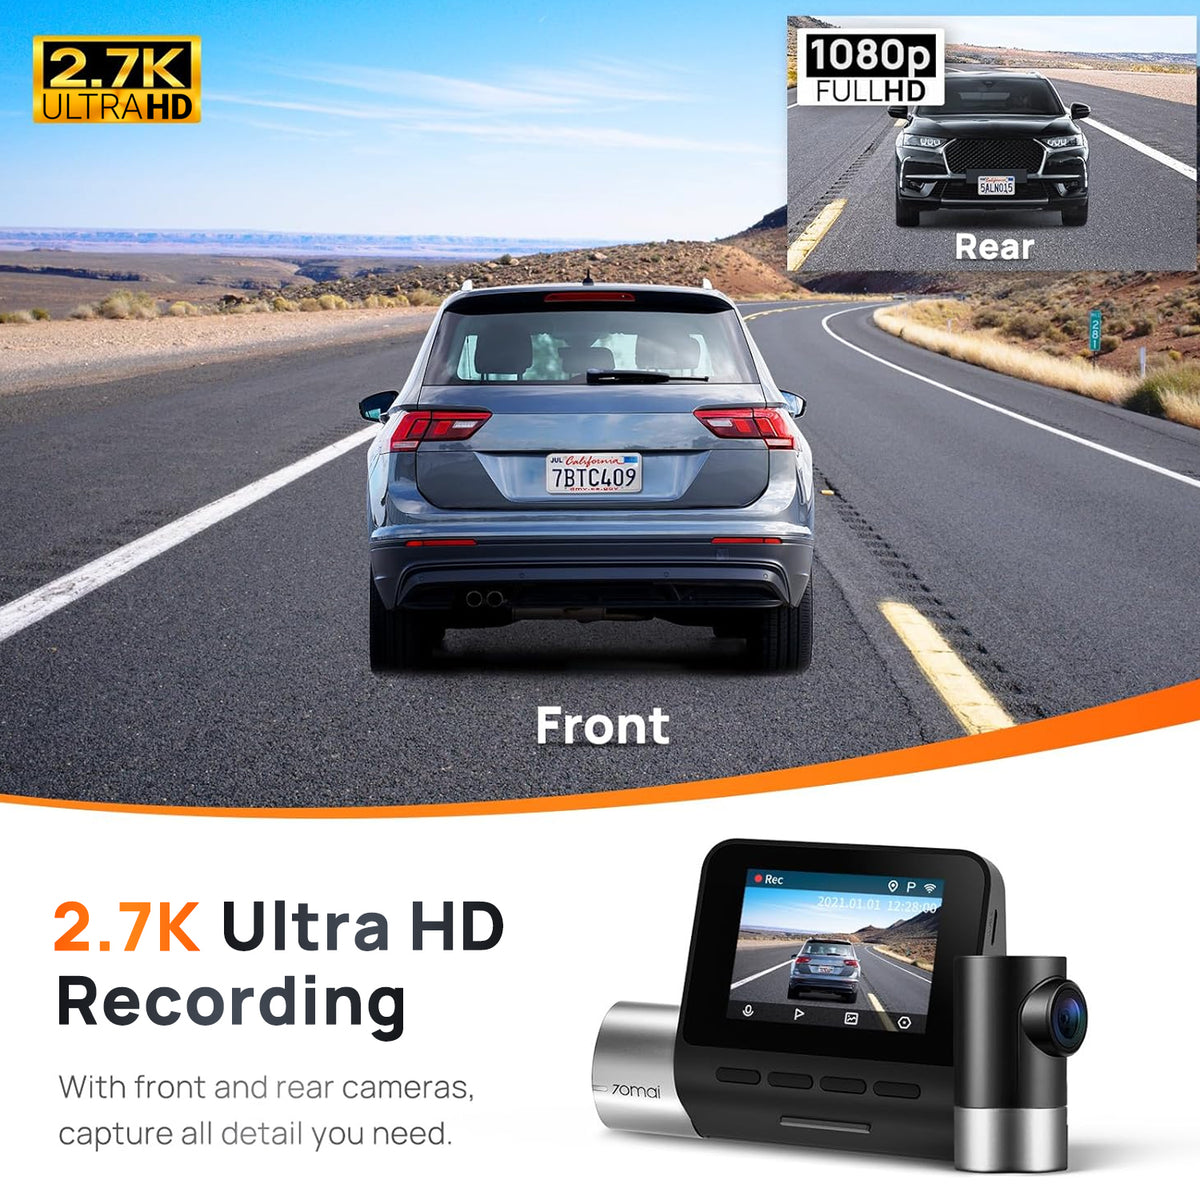 Buy 70mai Dash Cam Pro Plus - Giztop